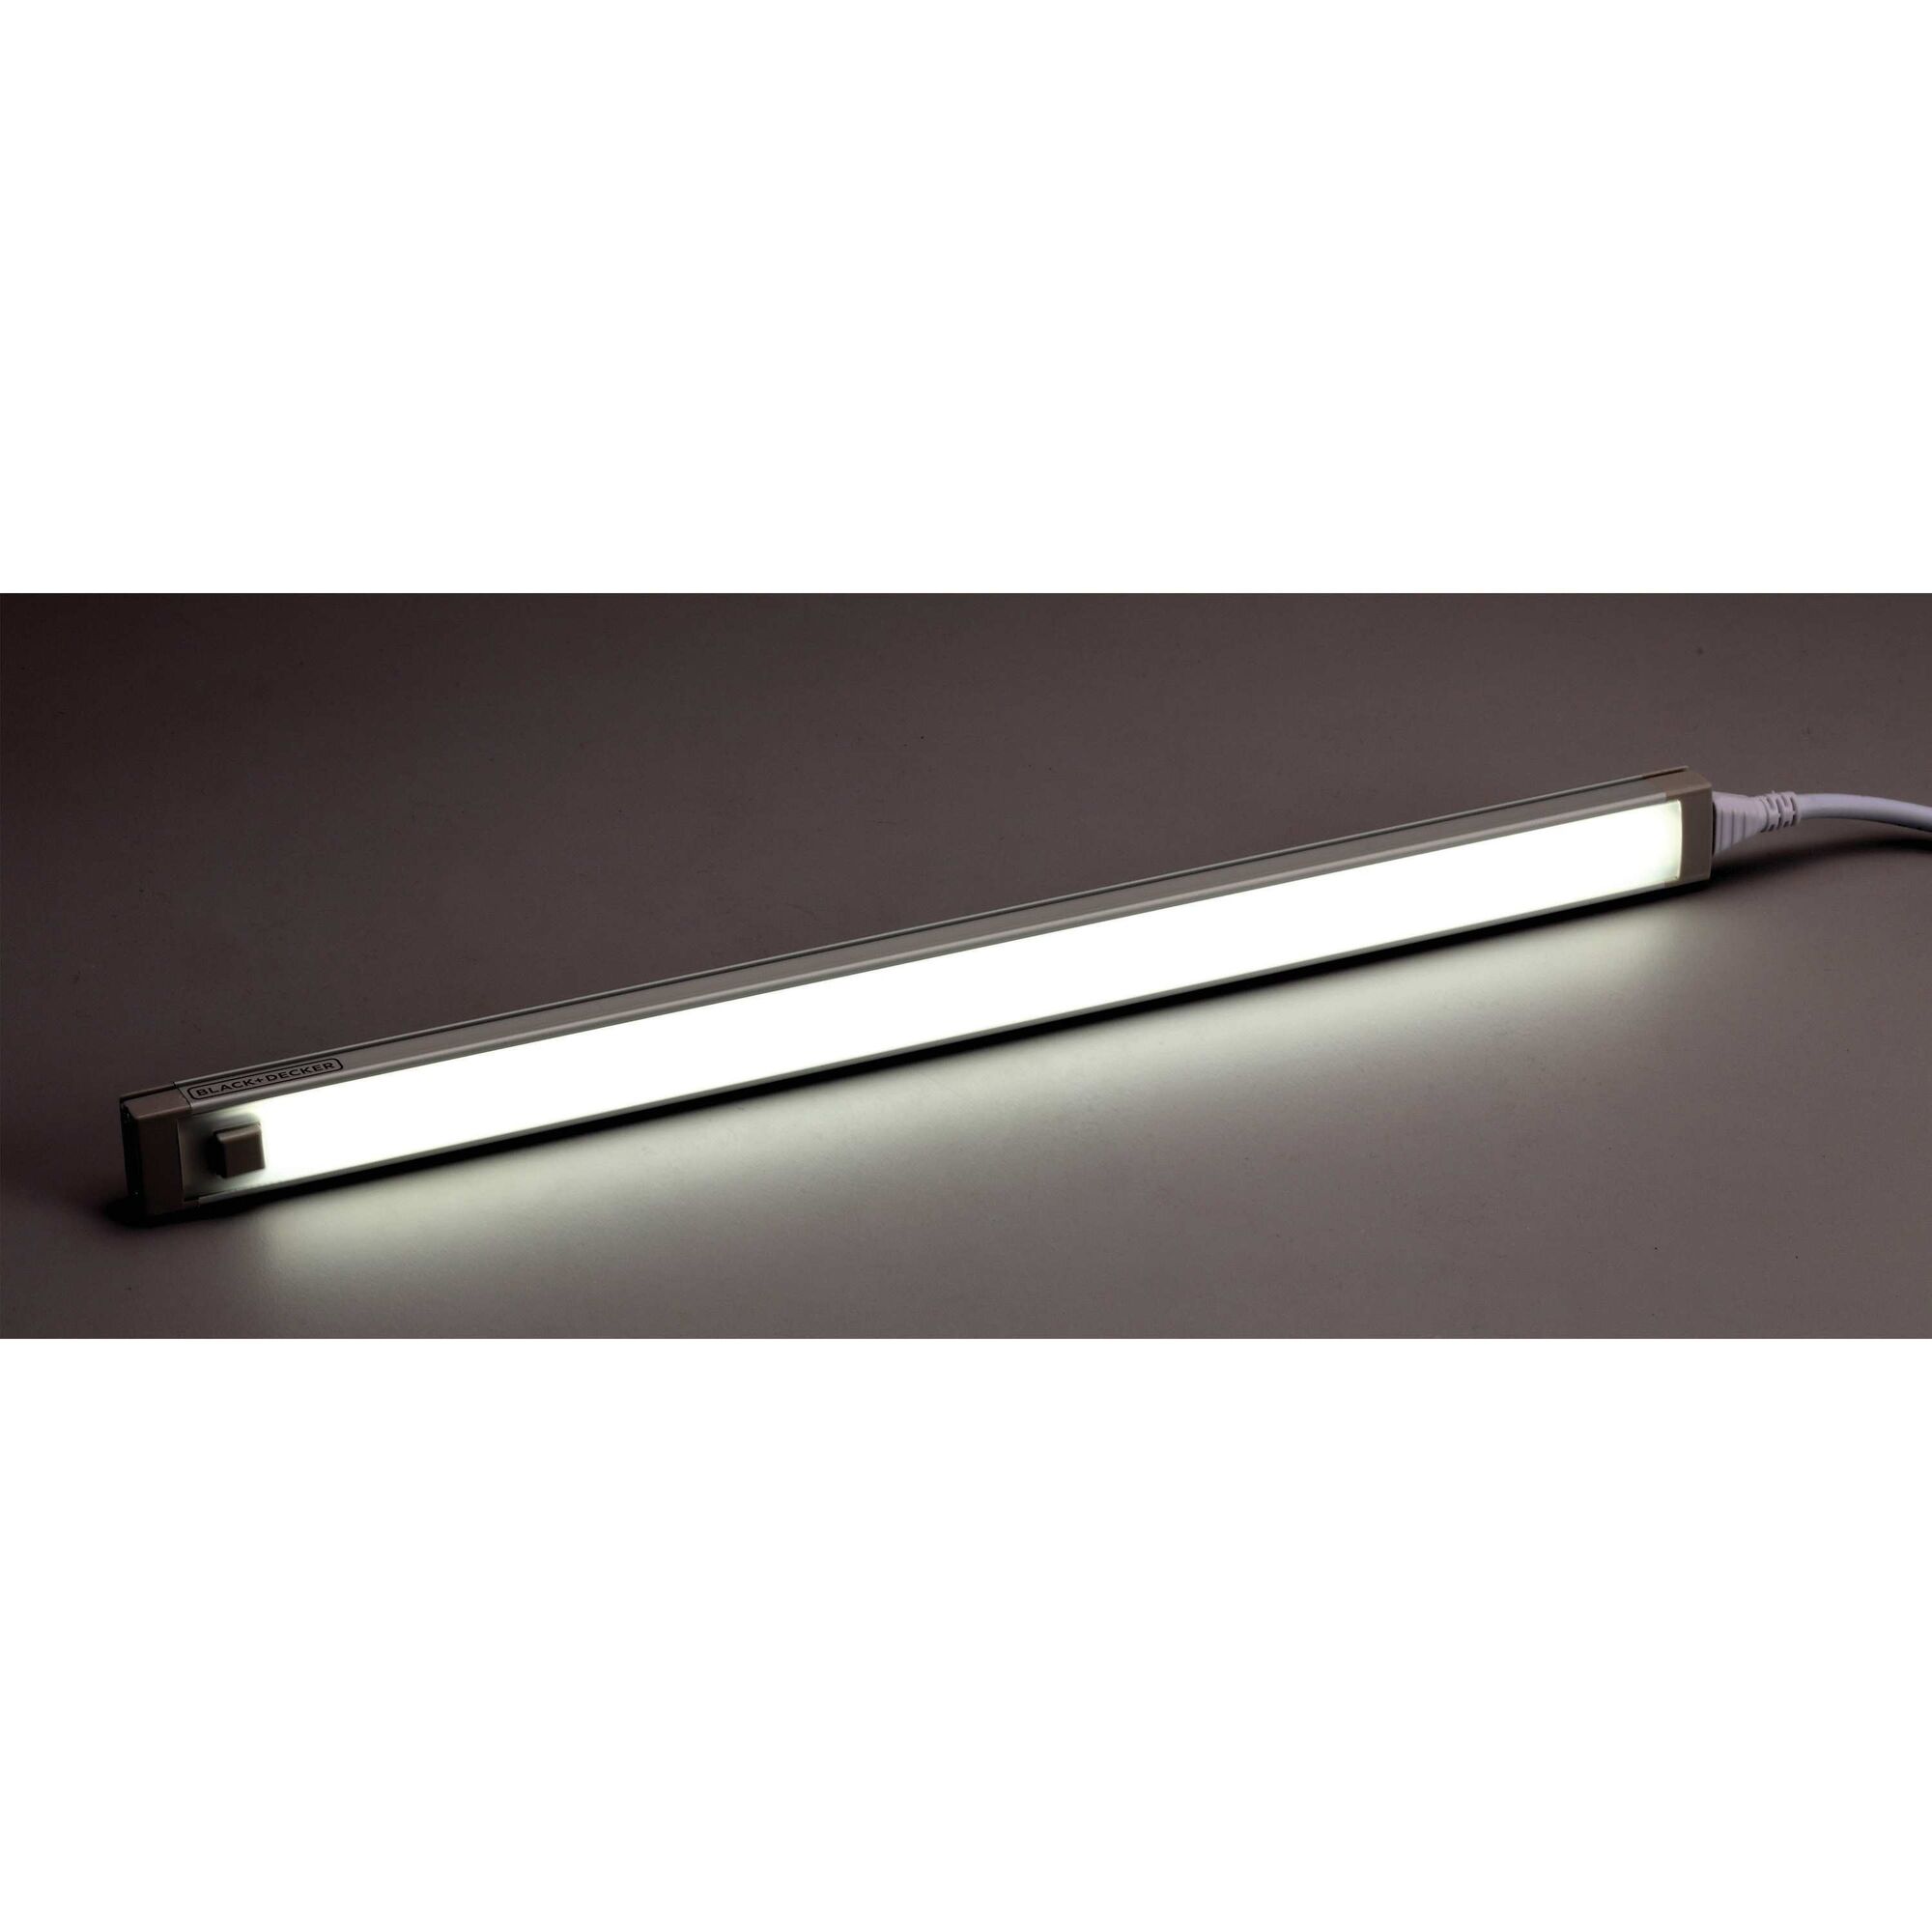 Pure Optics L E D feature of 12 inch 2 bar L E D under cabinet lighting.